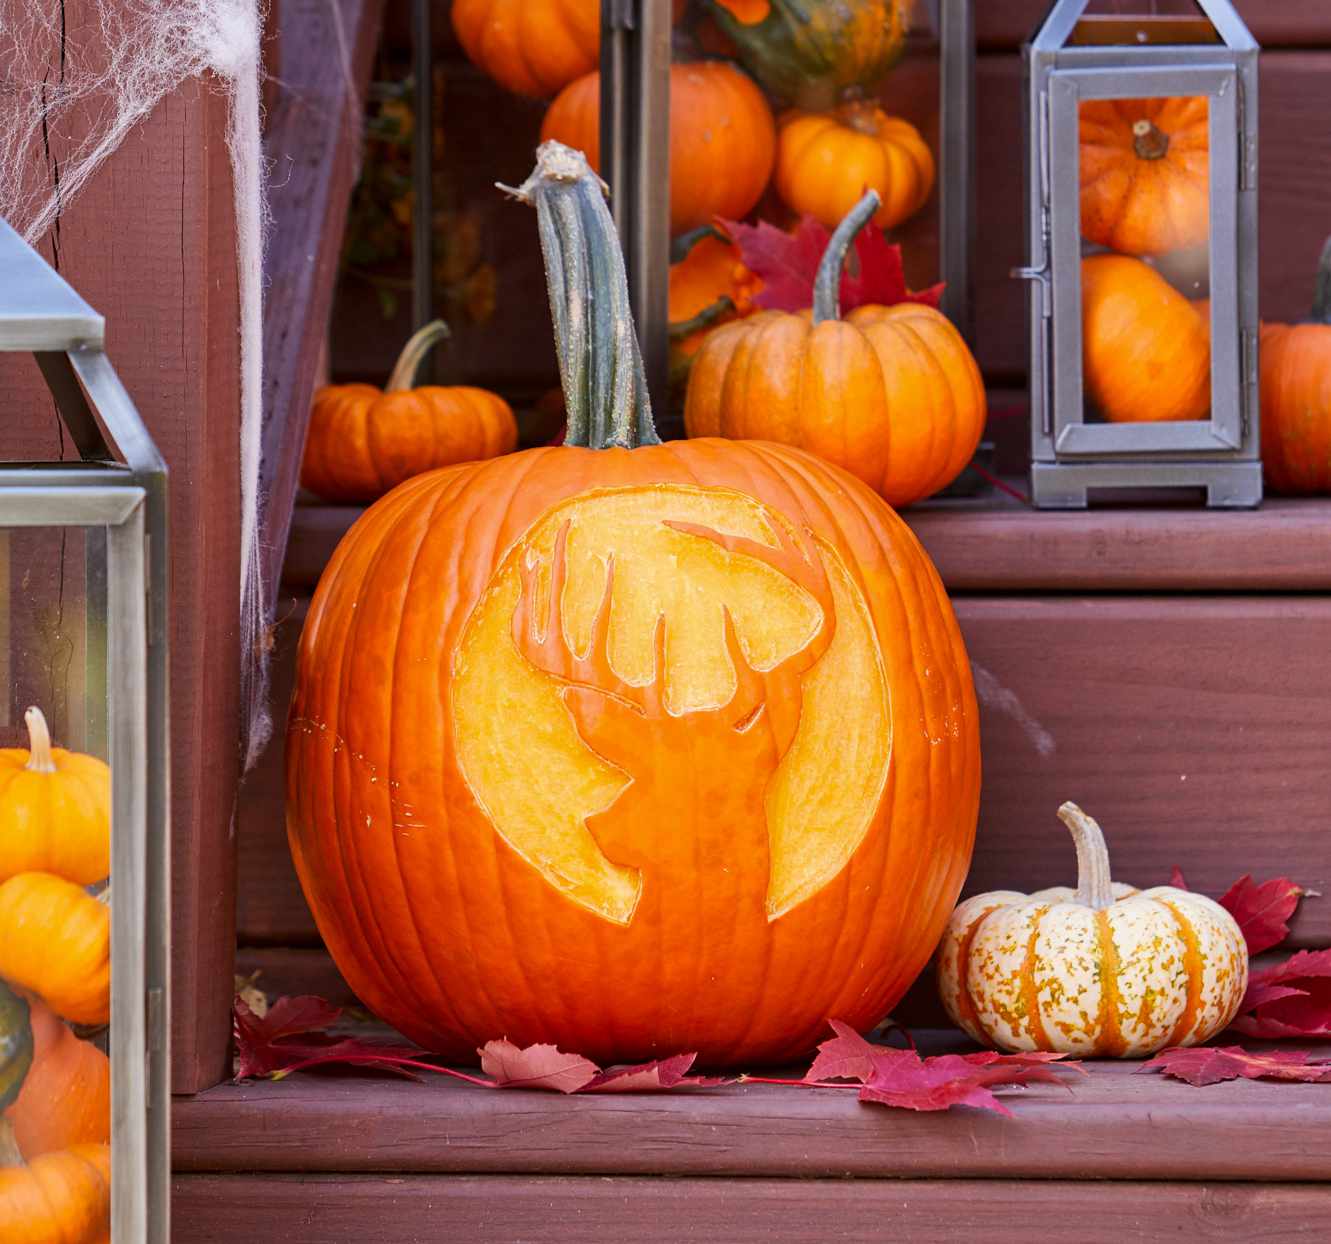 deer carving on pumpkin on steps during Halloween